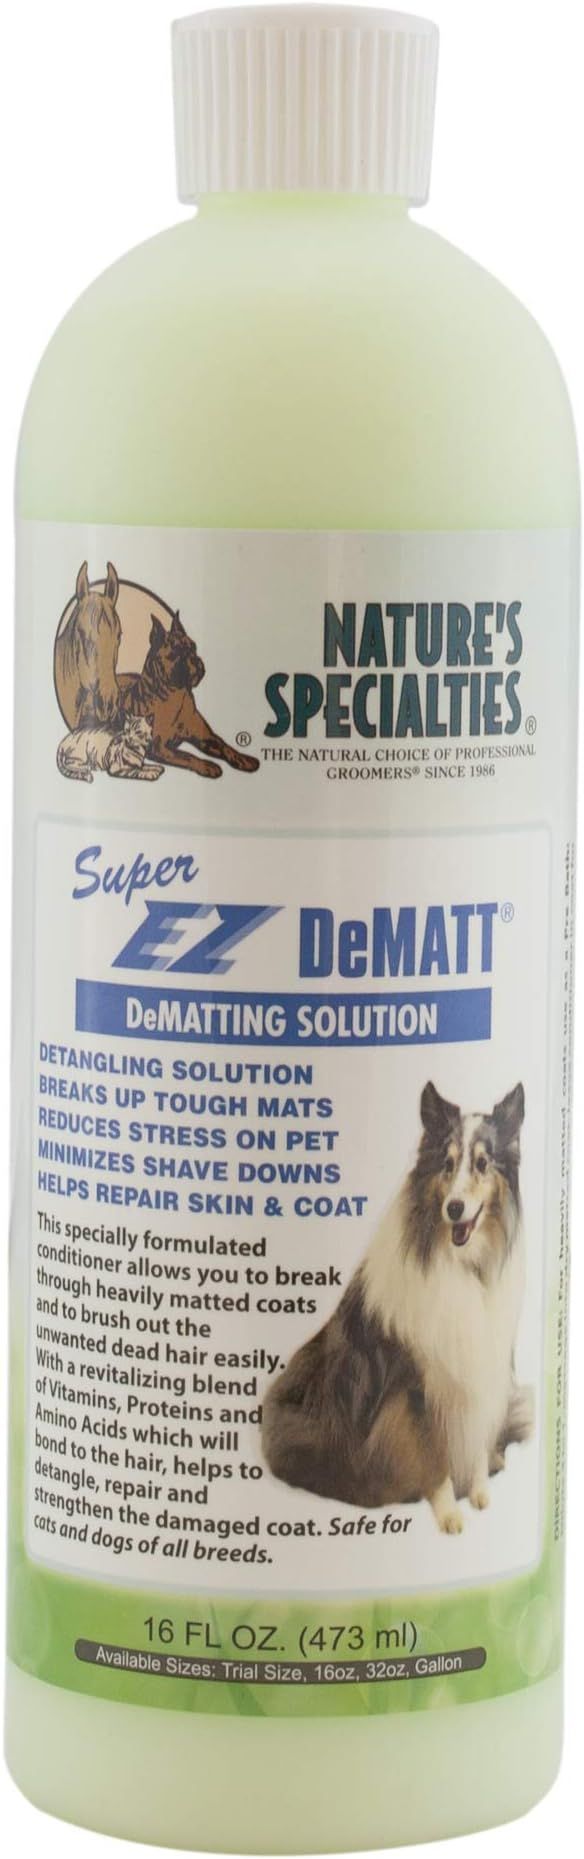 Nature's Specialties Super EZ DeMatt Dematting Solution Concentrate for Pets, Natural Choice for ... | Amazon (US)